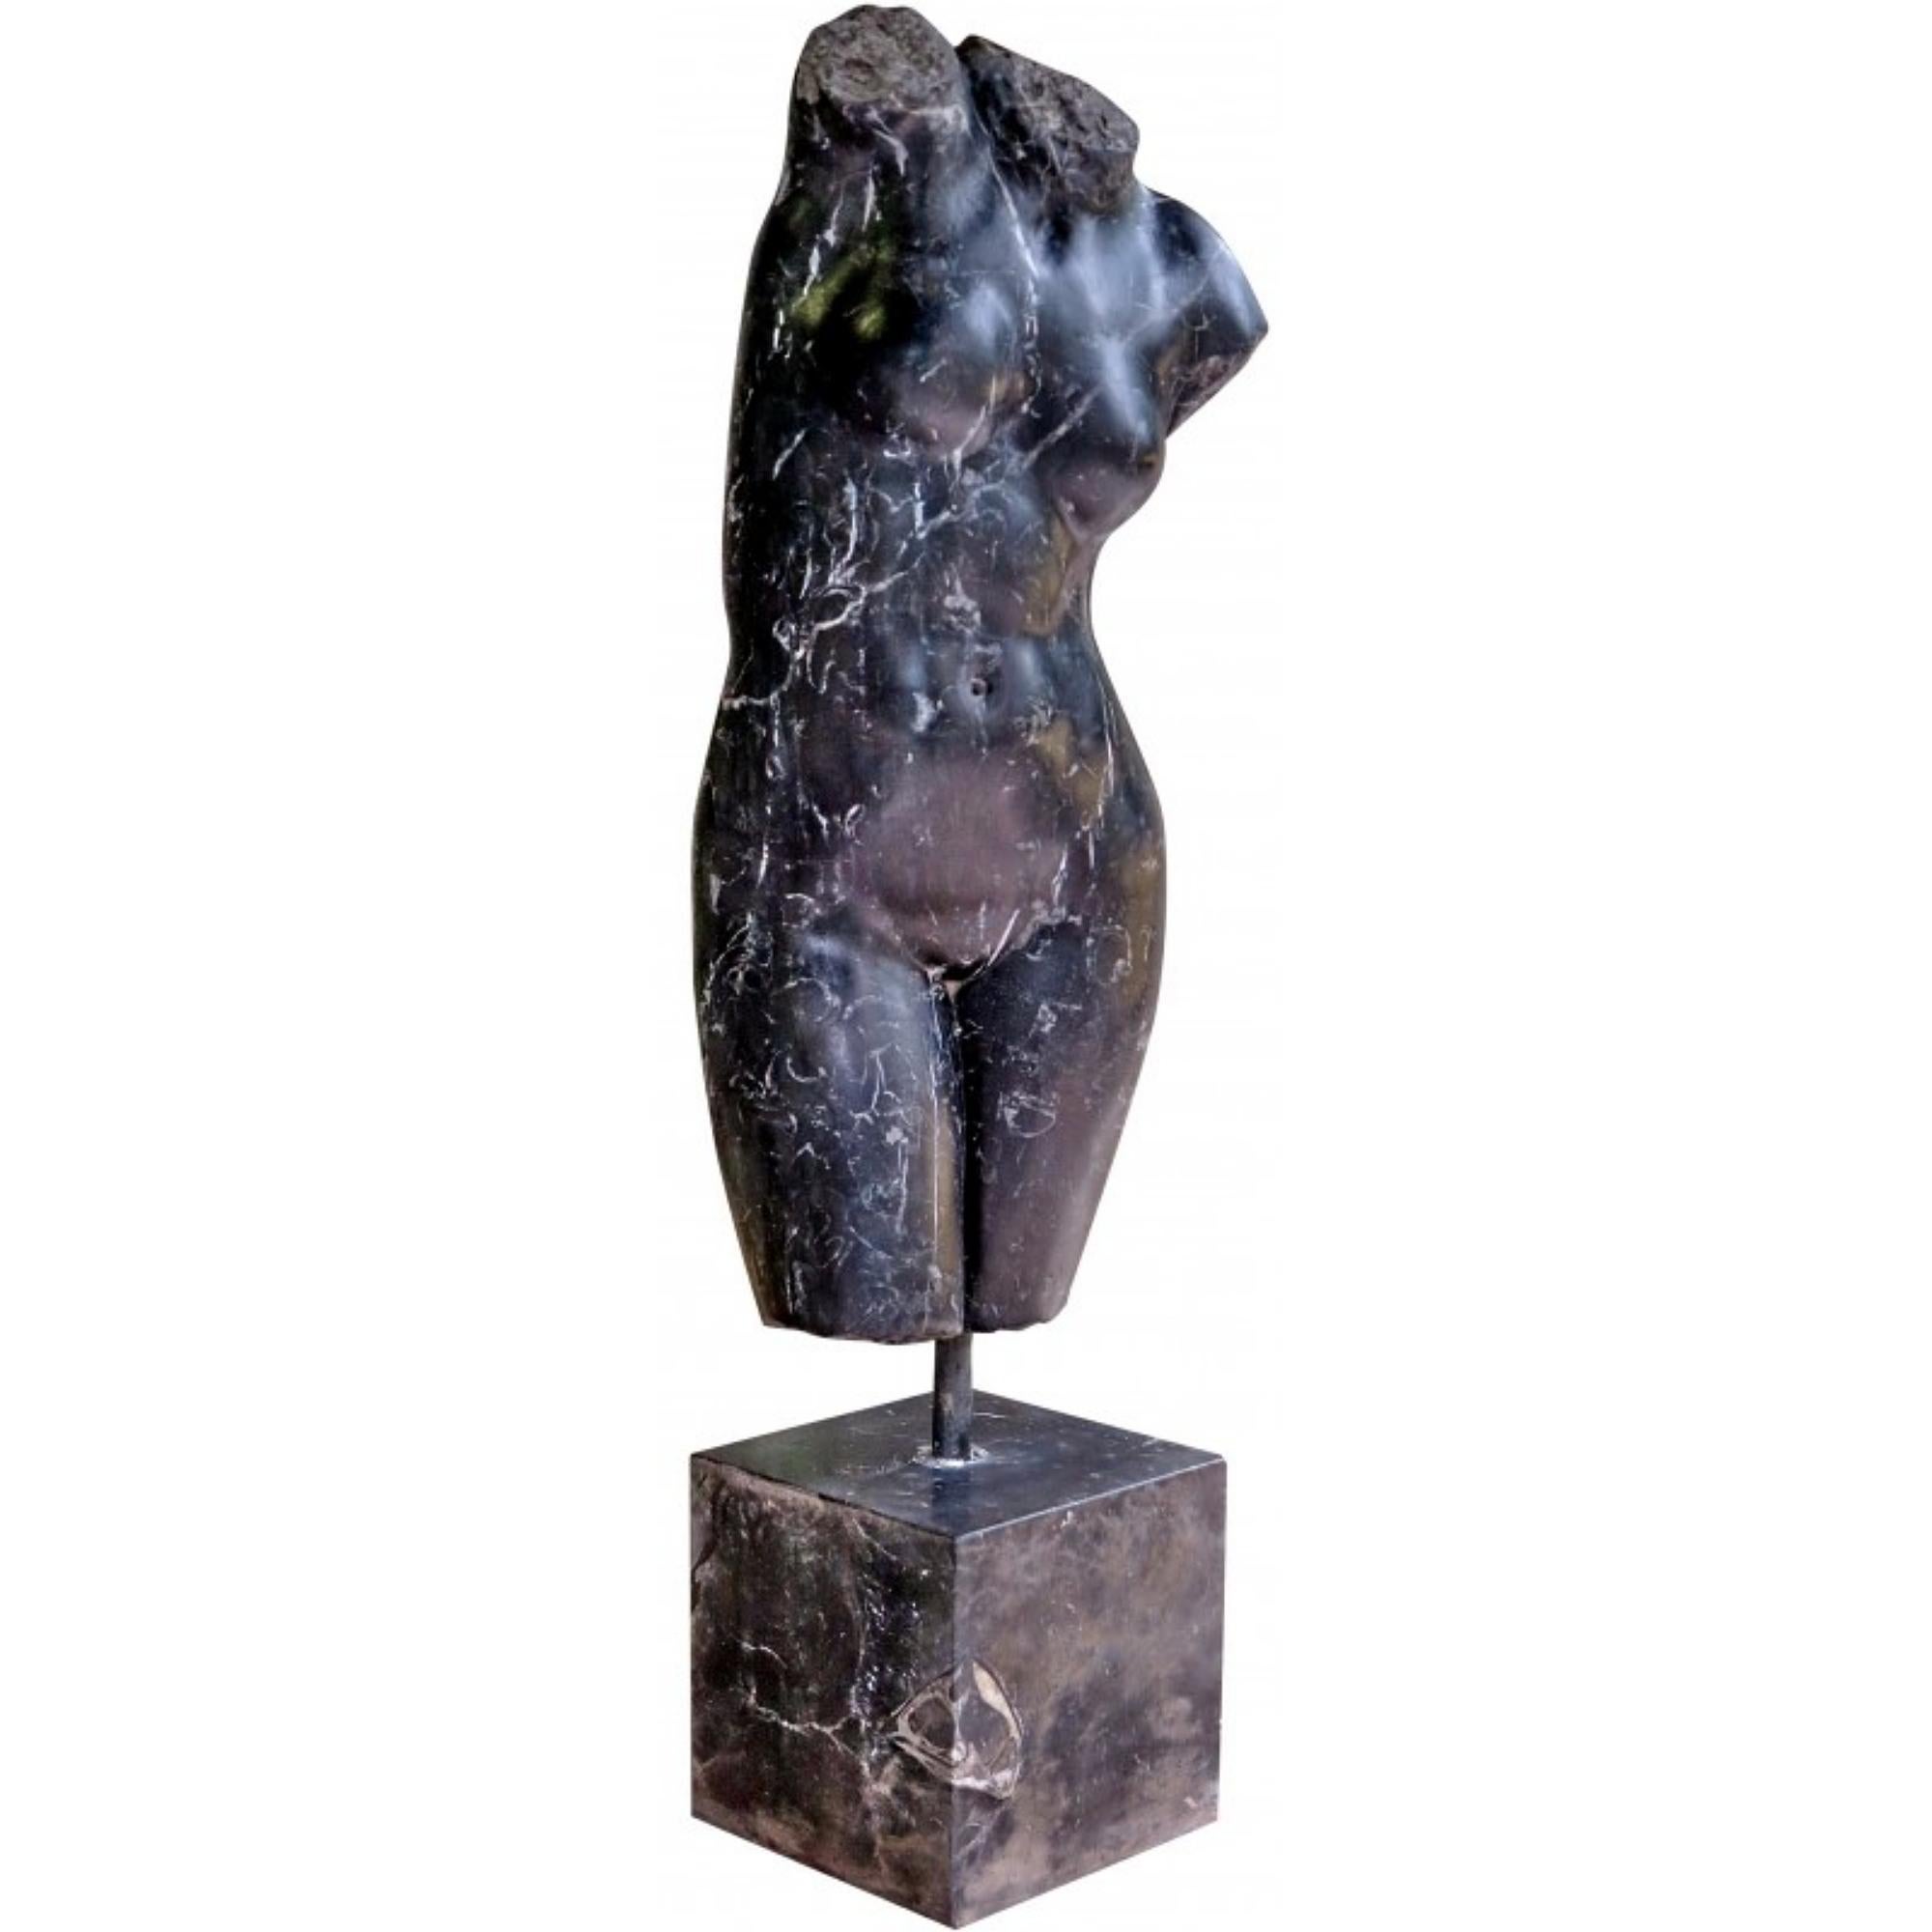 Modern Female Bust, Roman Venus in Black Marble Early 20th Century